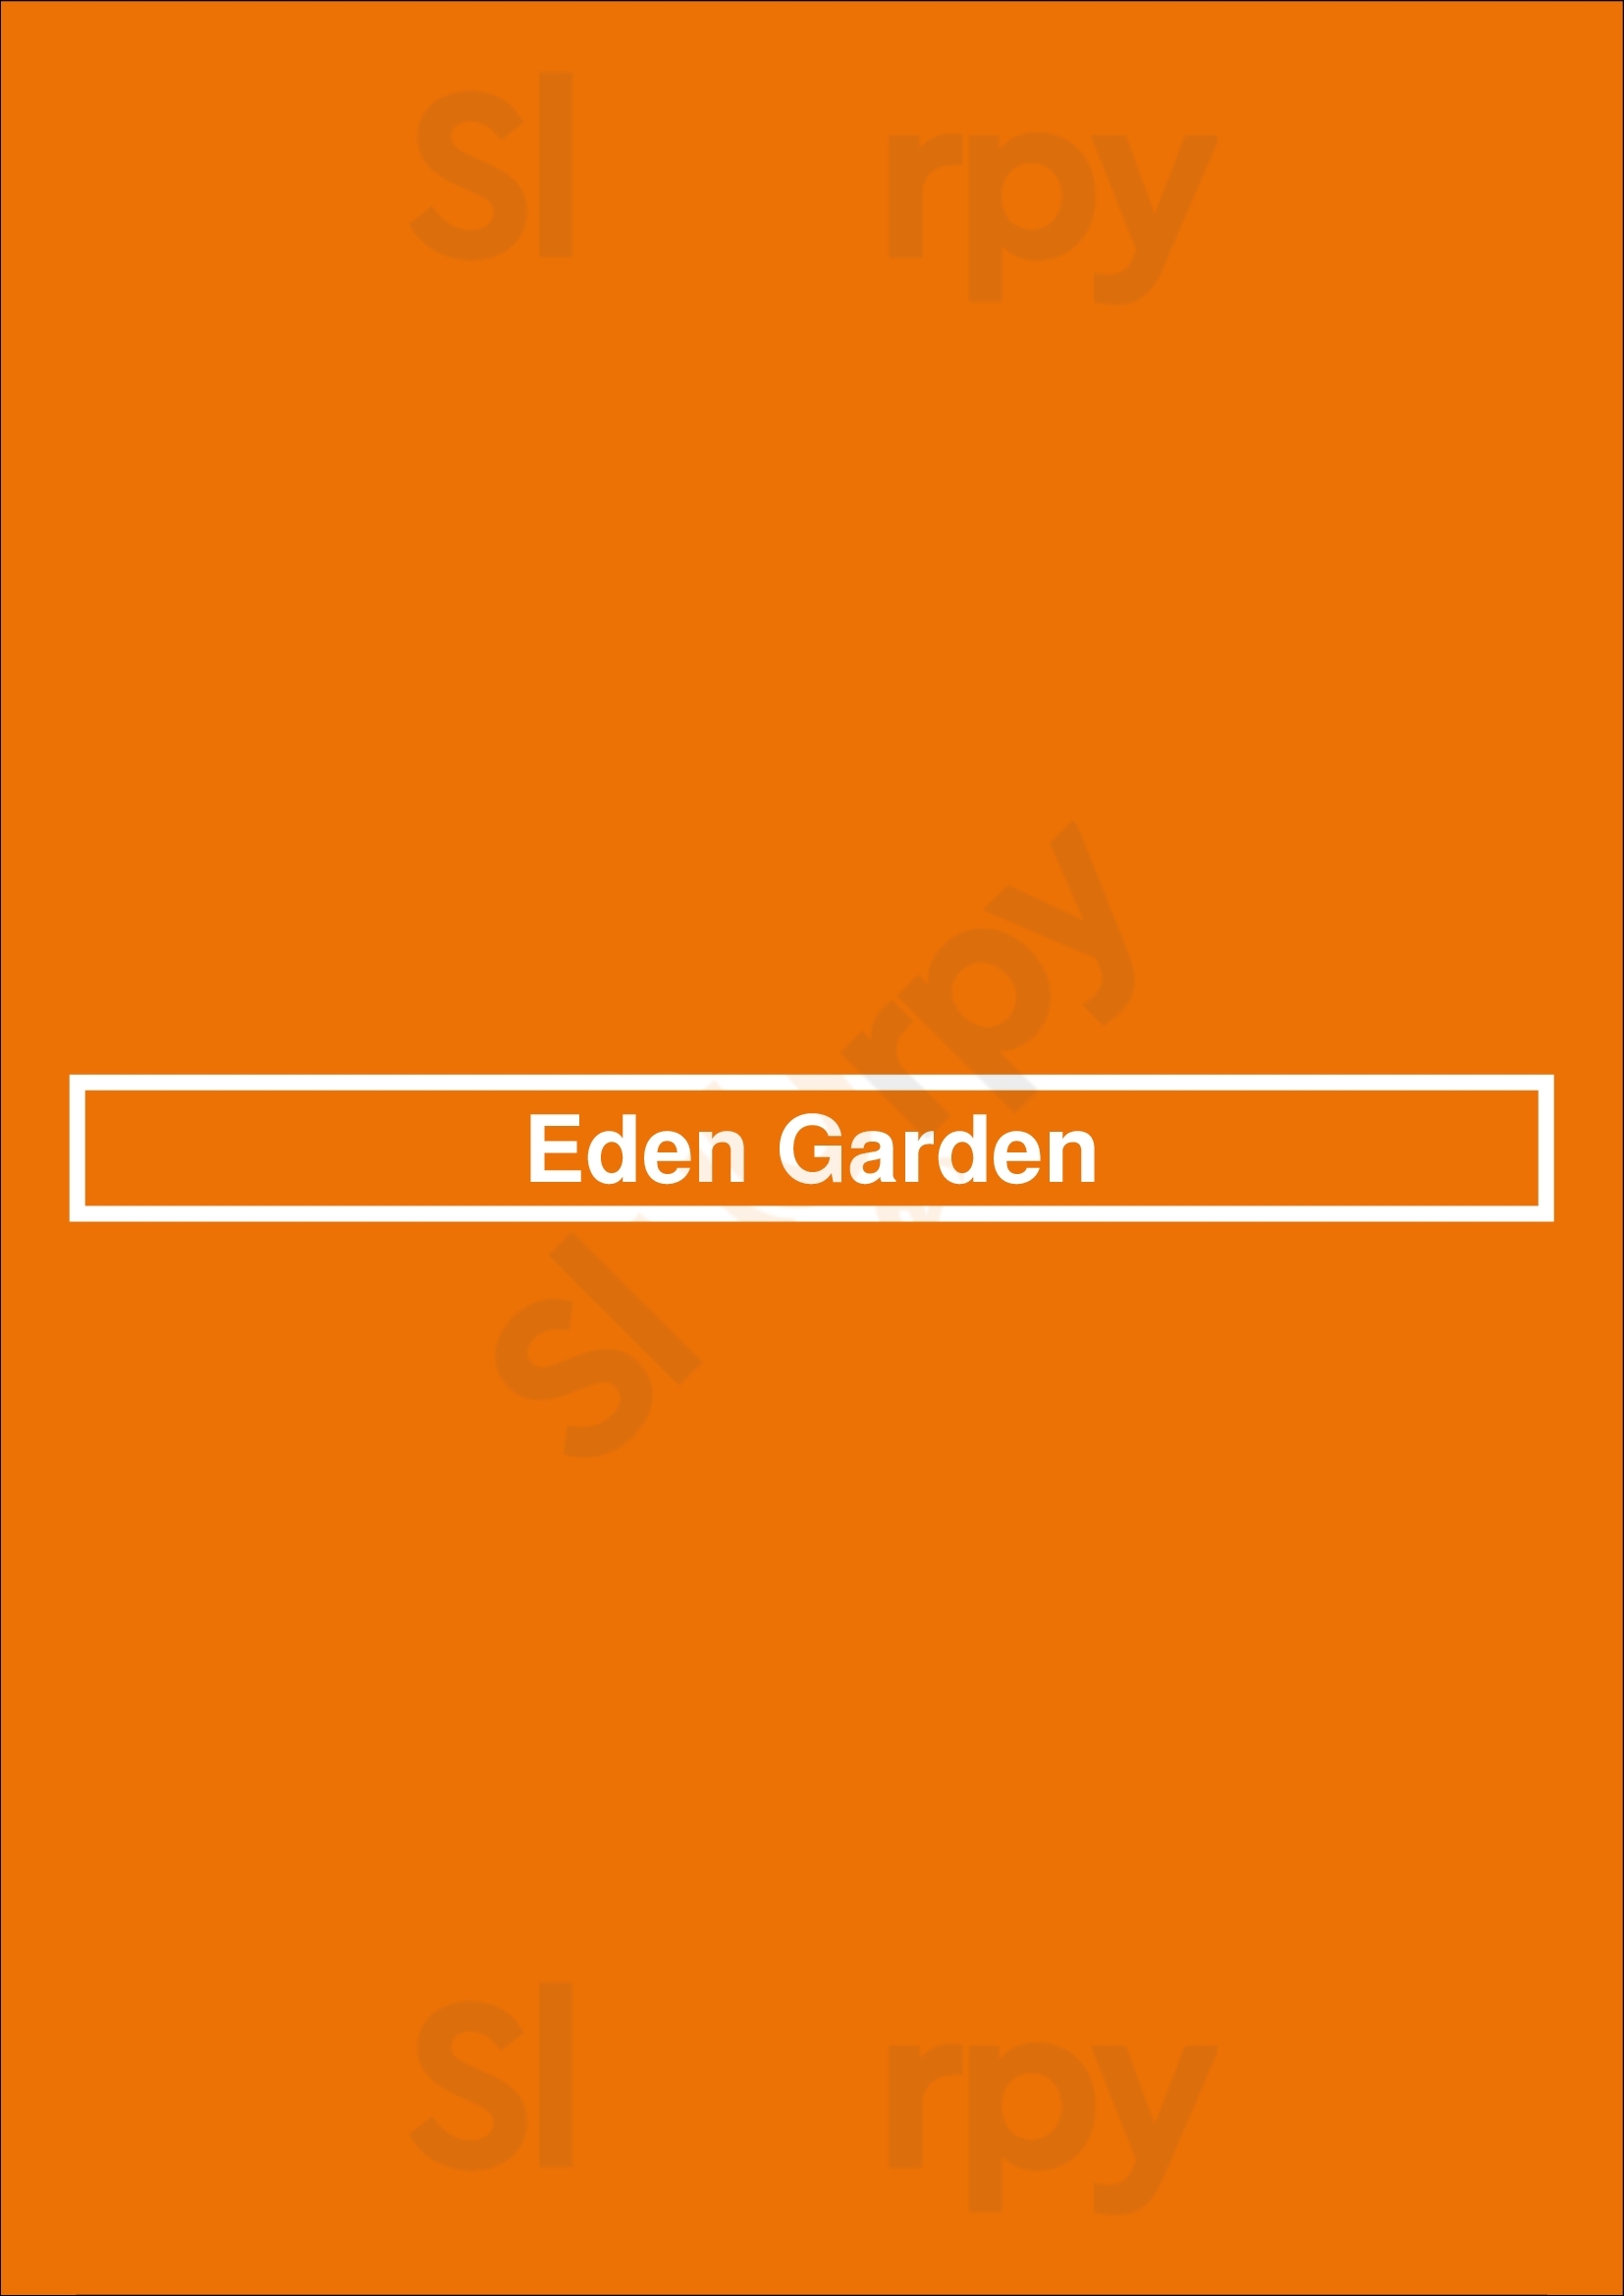 Eden Garden Nice Menu - 1